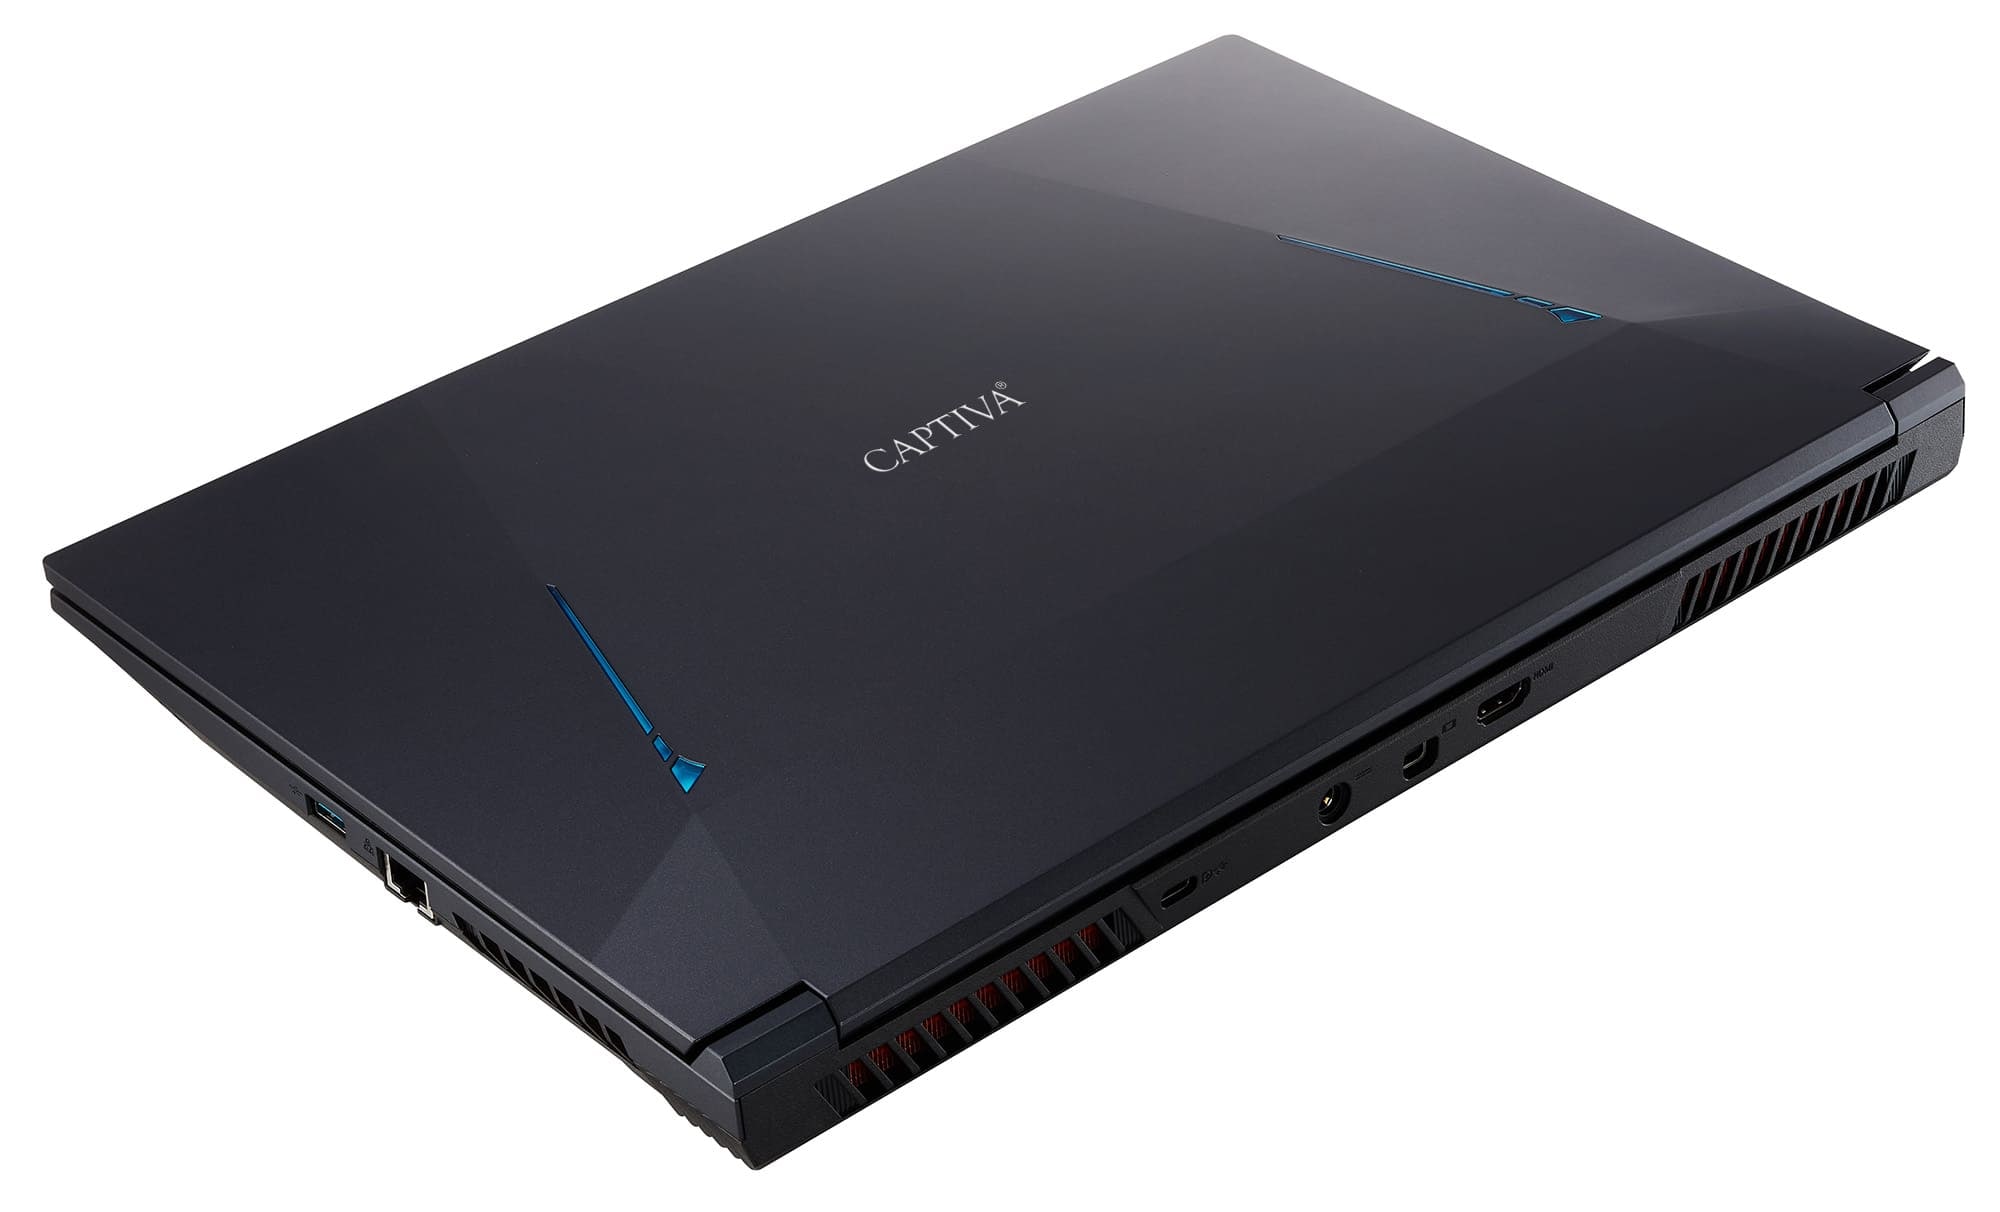 CAPTIVA Gaming-Notebook »Advanced Gaming I74-133«, 39,6 cm, / 15,6 Zoll, Intel, Core i5, 2000 GB SSD